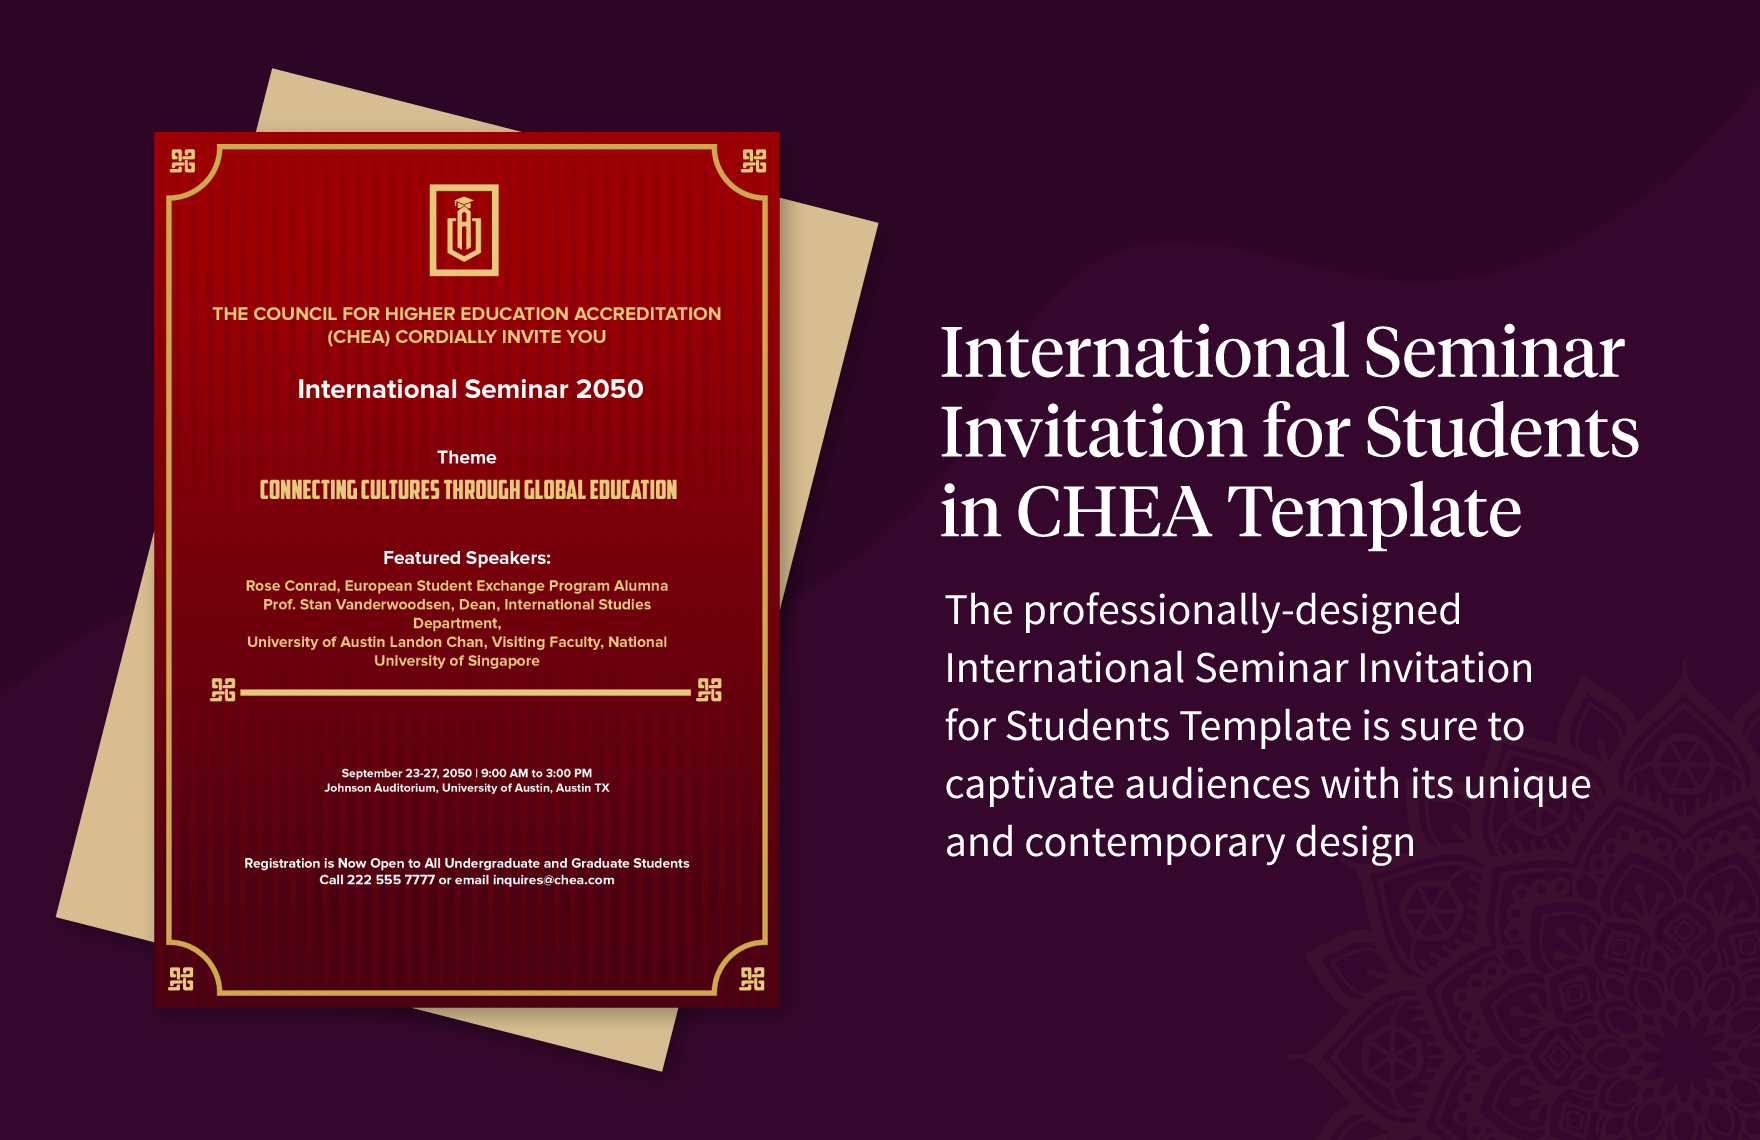 International Seminar Invitation for Students in CHEA Template